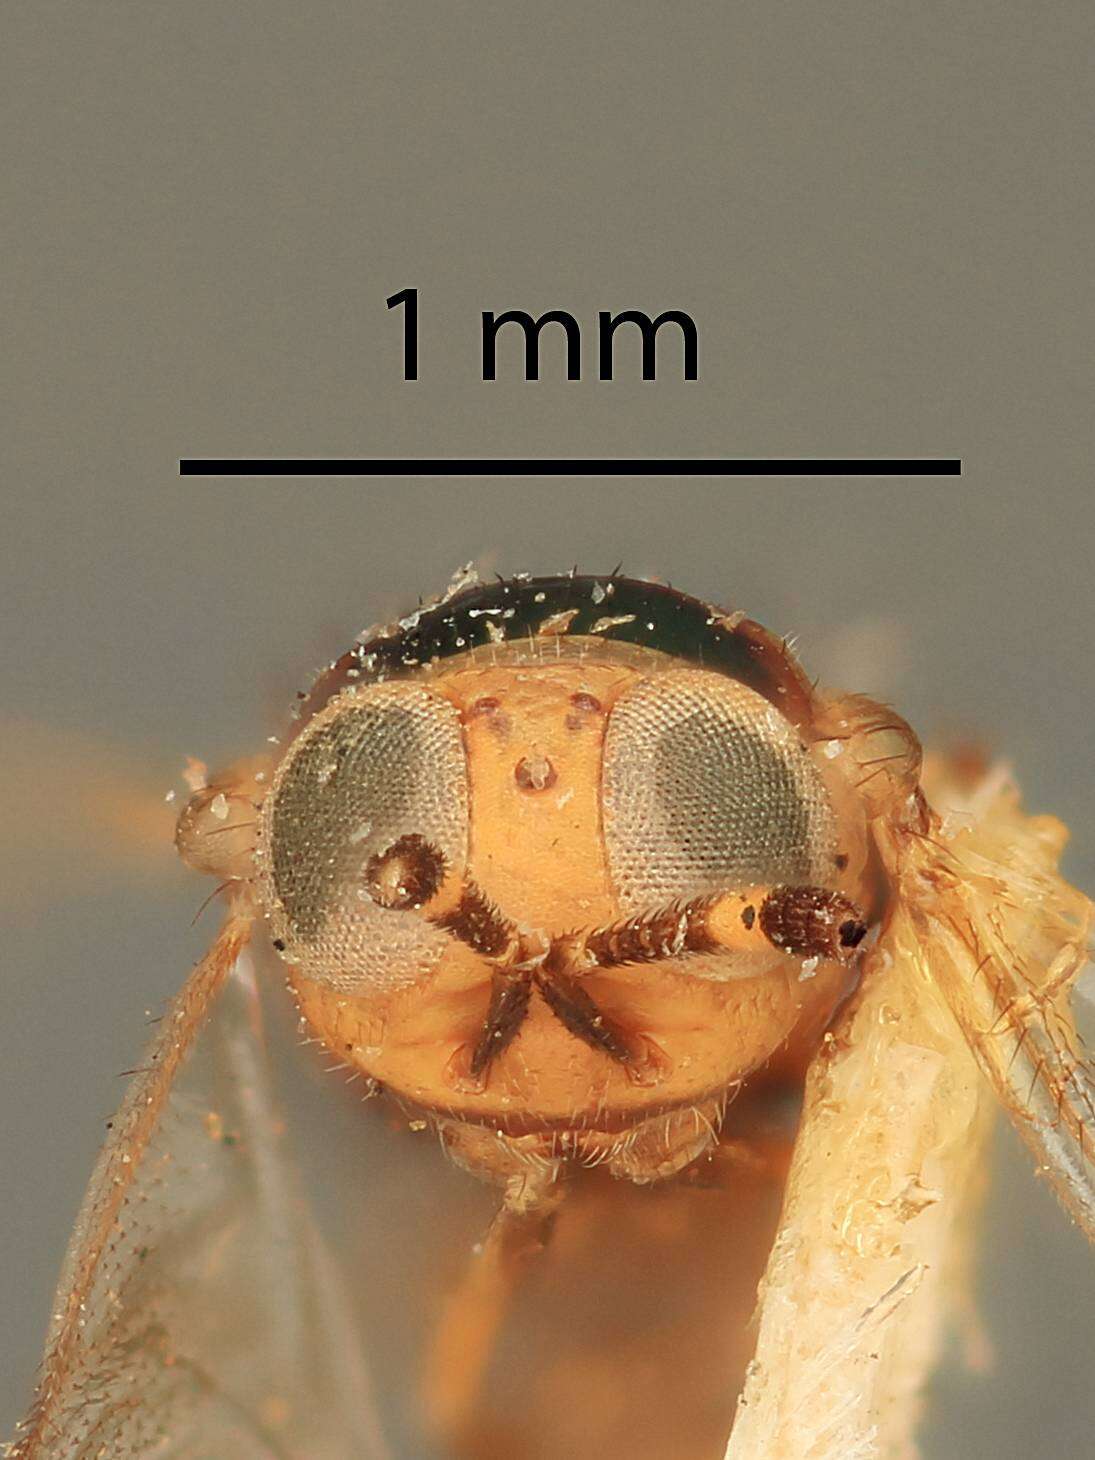 Image of Microterys sylvius (Dalman 1820)